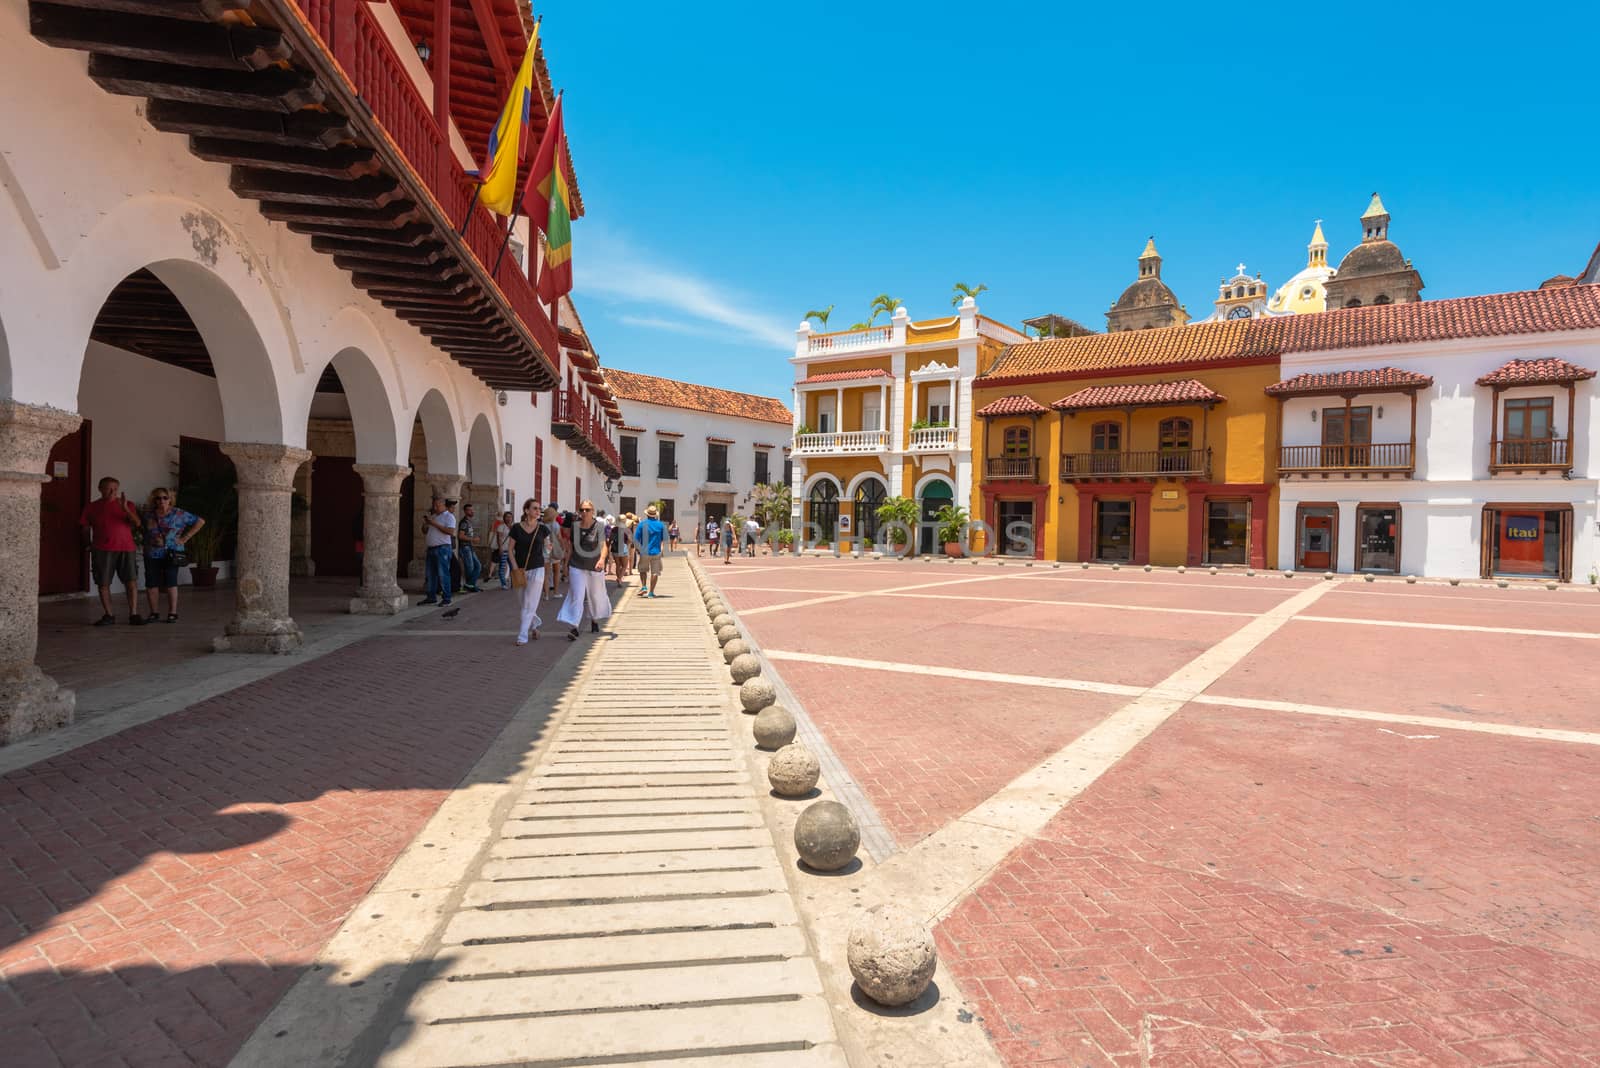 Tourists in Cartagena by jfbenning